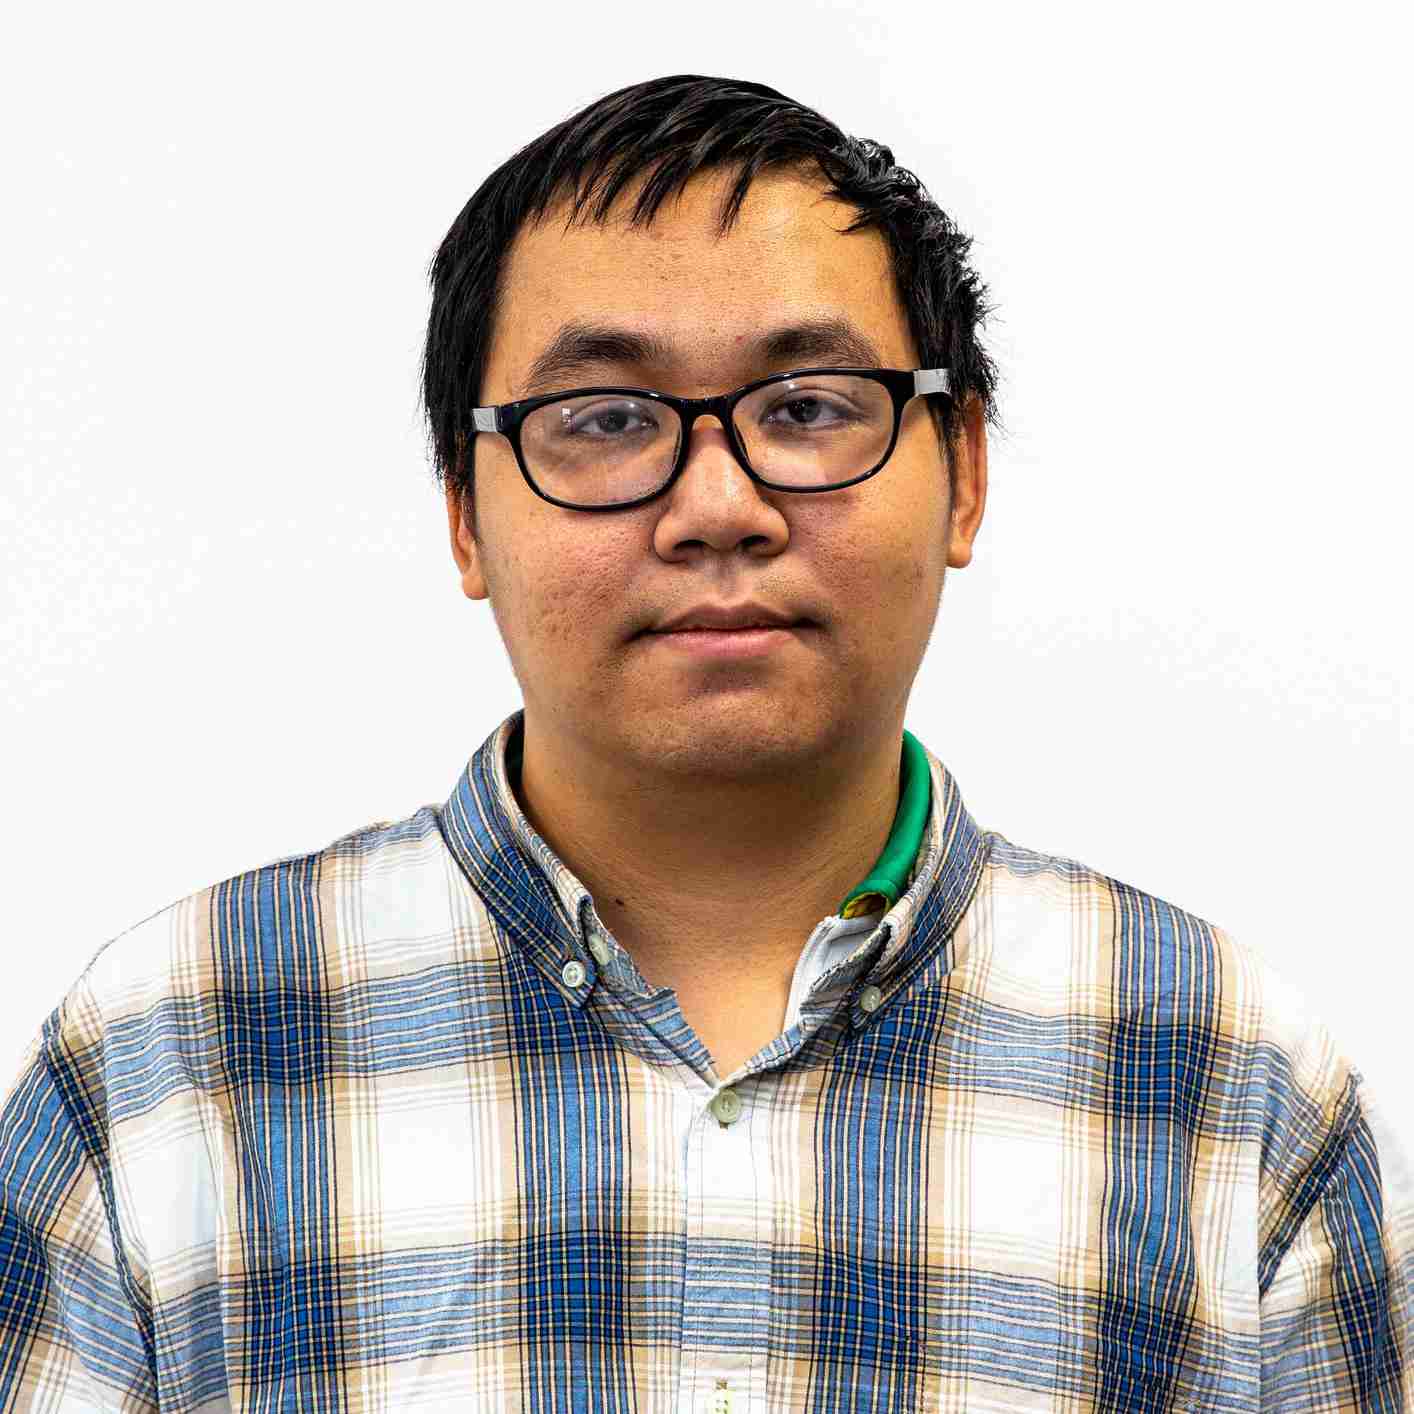 Profile image of Mr Truong Dang